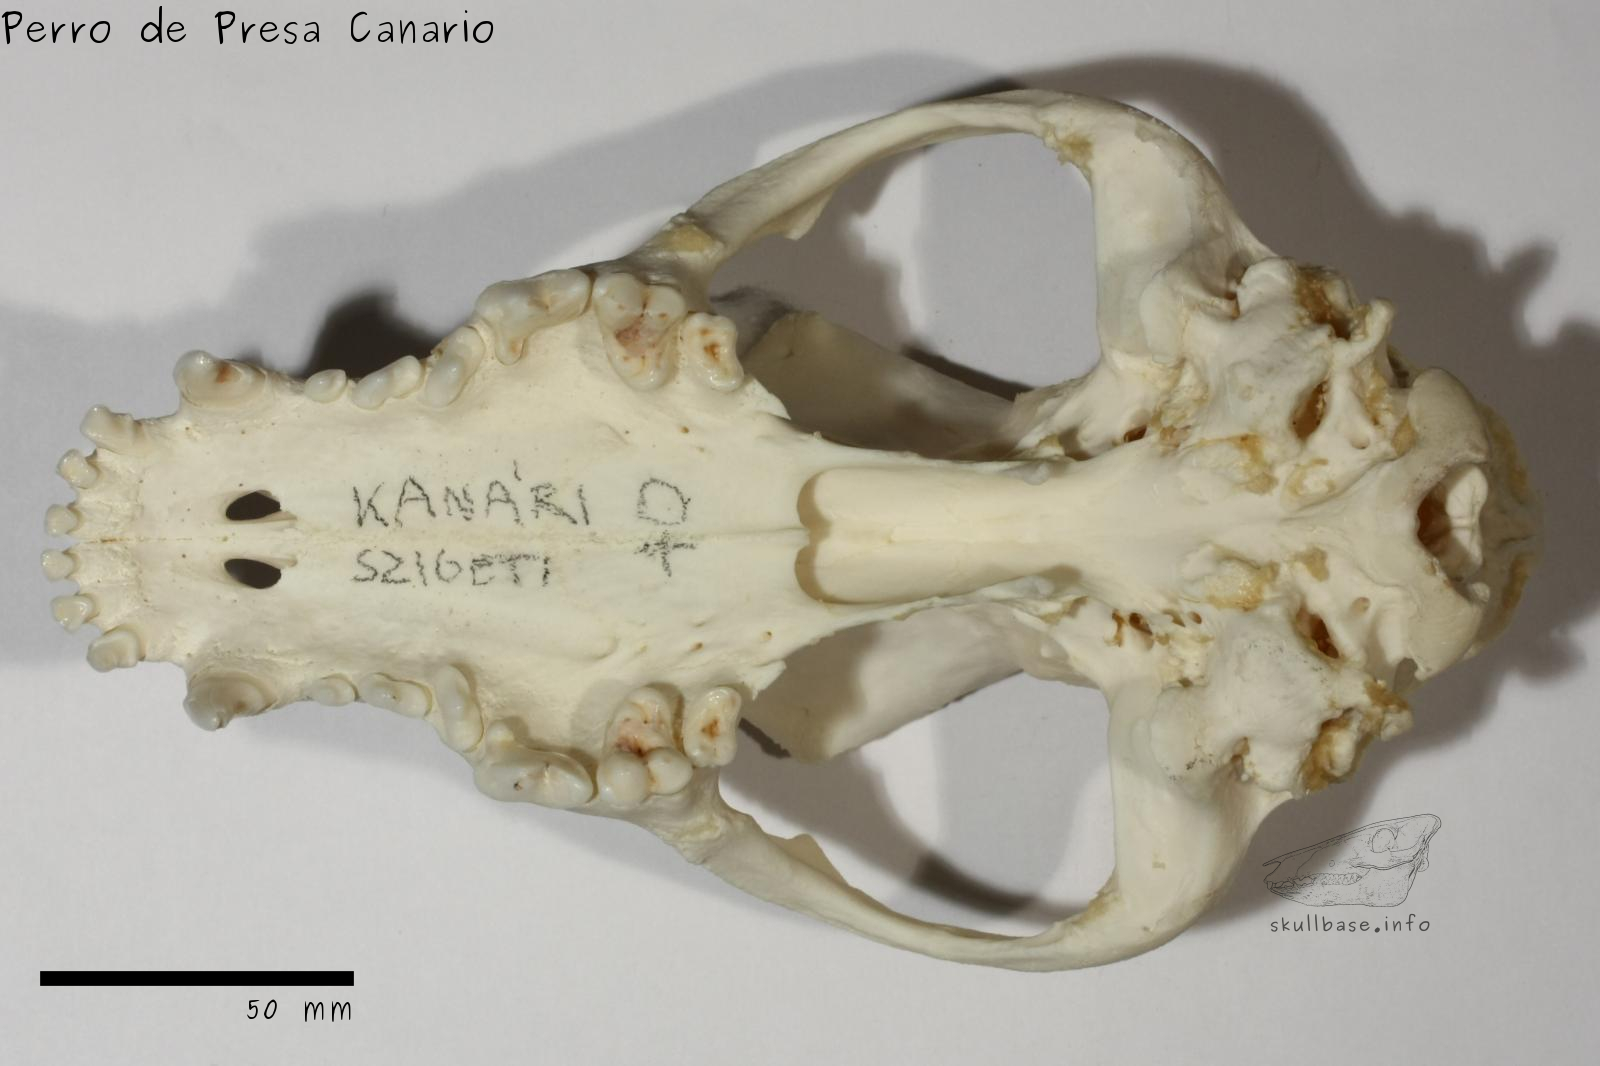 Perro de Presa Canario (Canis lupus familiaris) skull ventral view